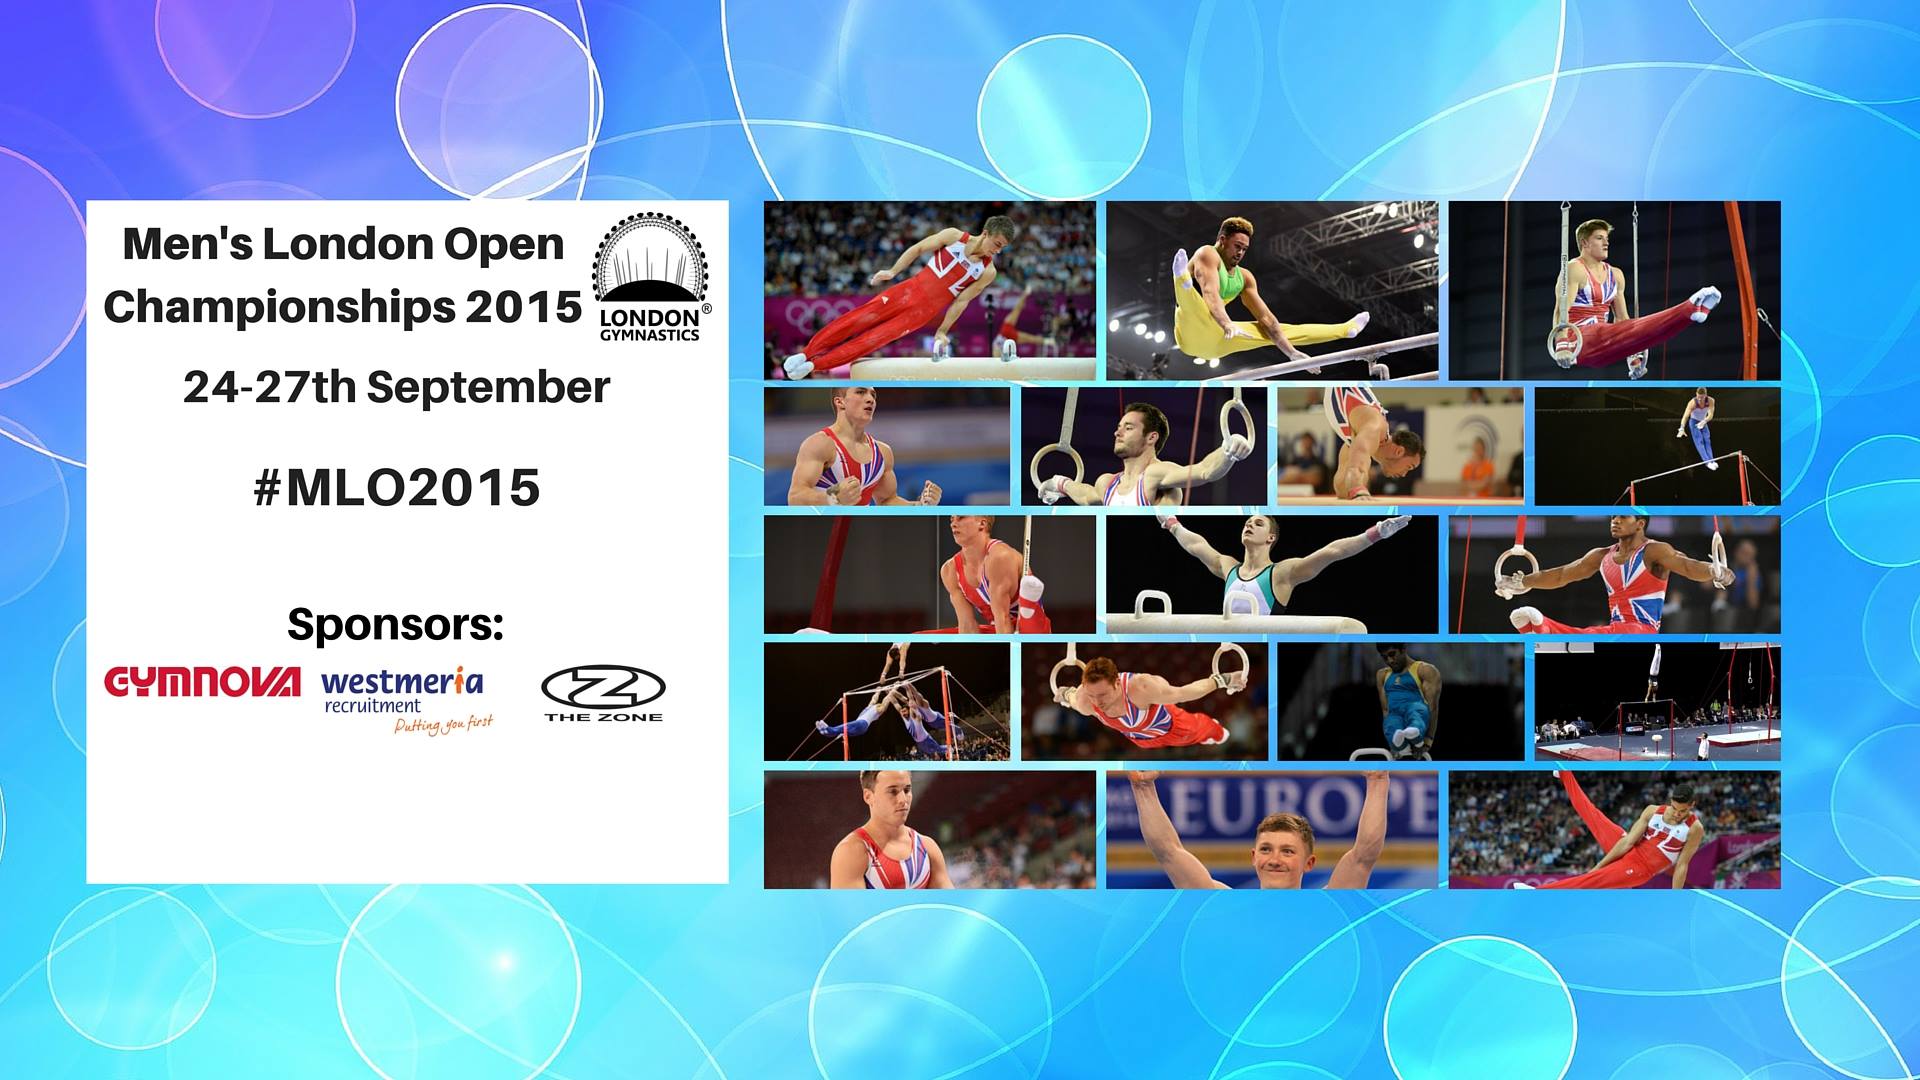 Men's London Open Championships 2015